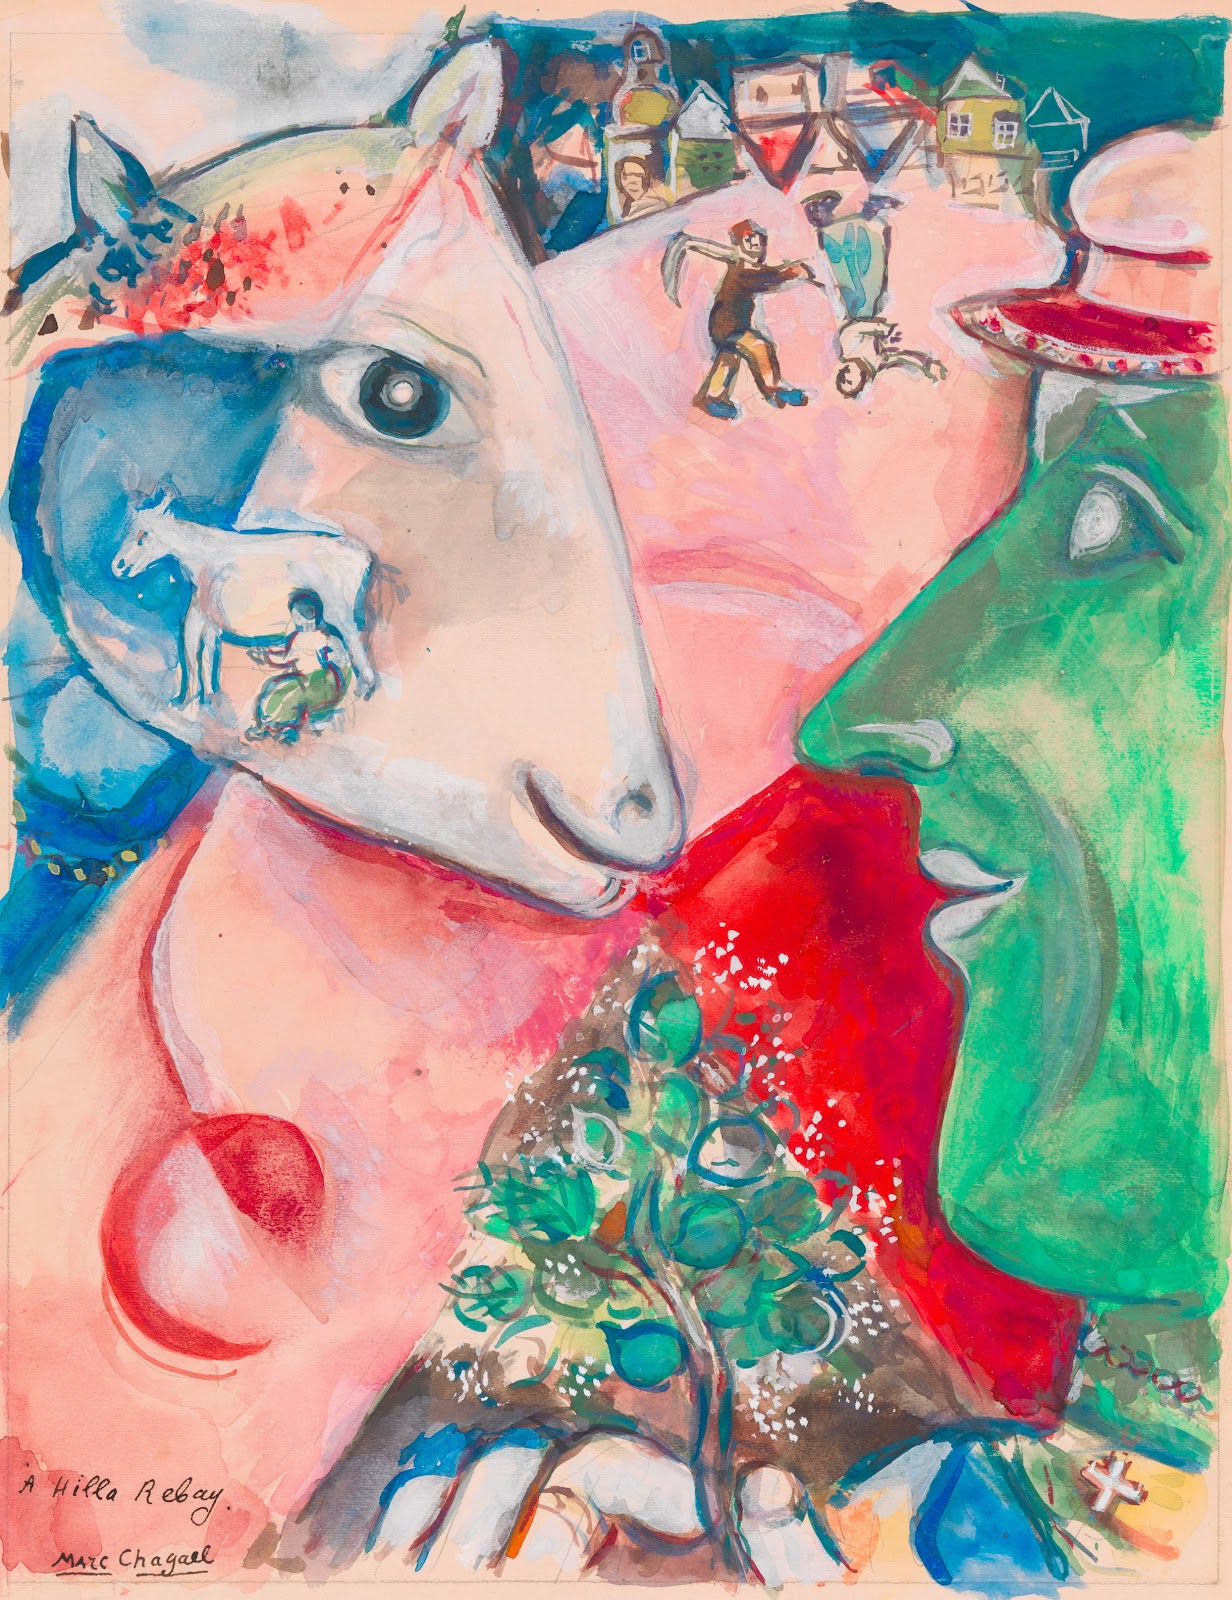 Marc+Chagall-1887-1985 (77).jpg